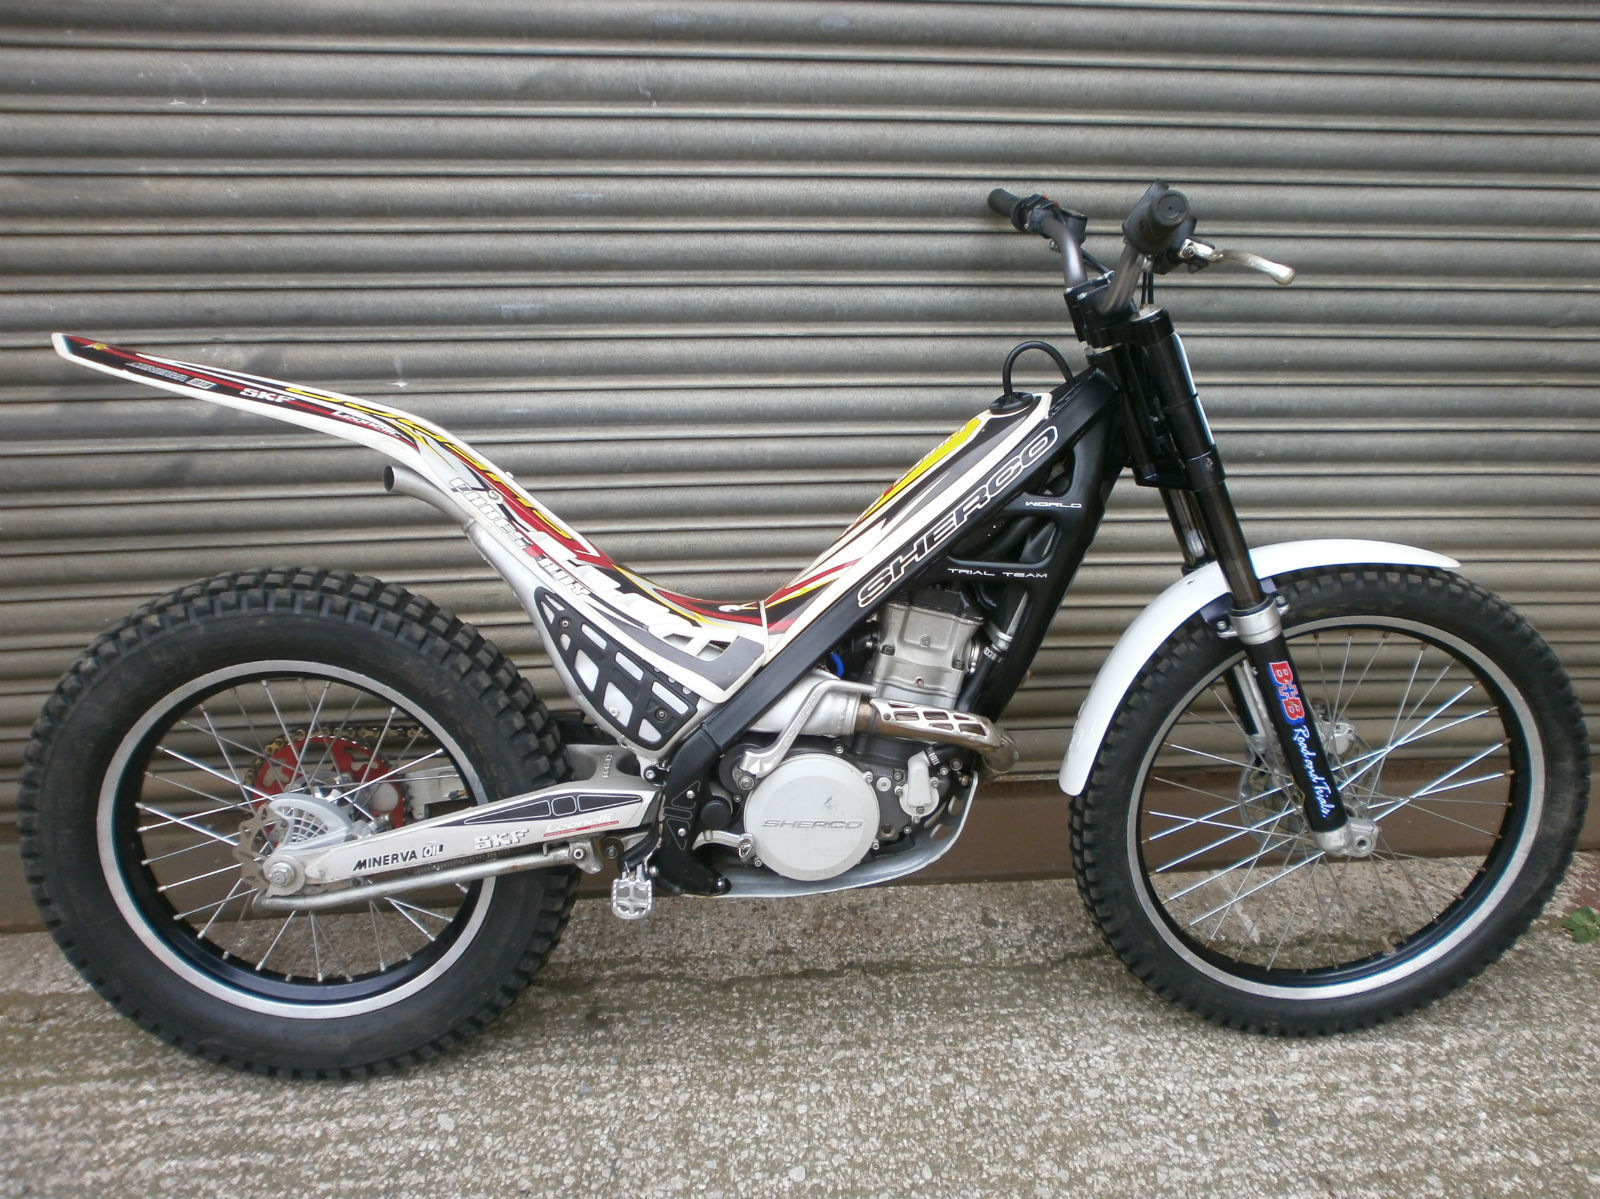 sherco trials bike for sale on ebay